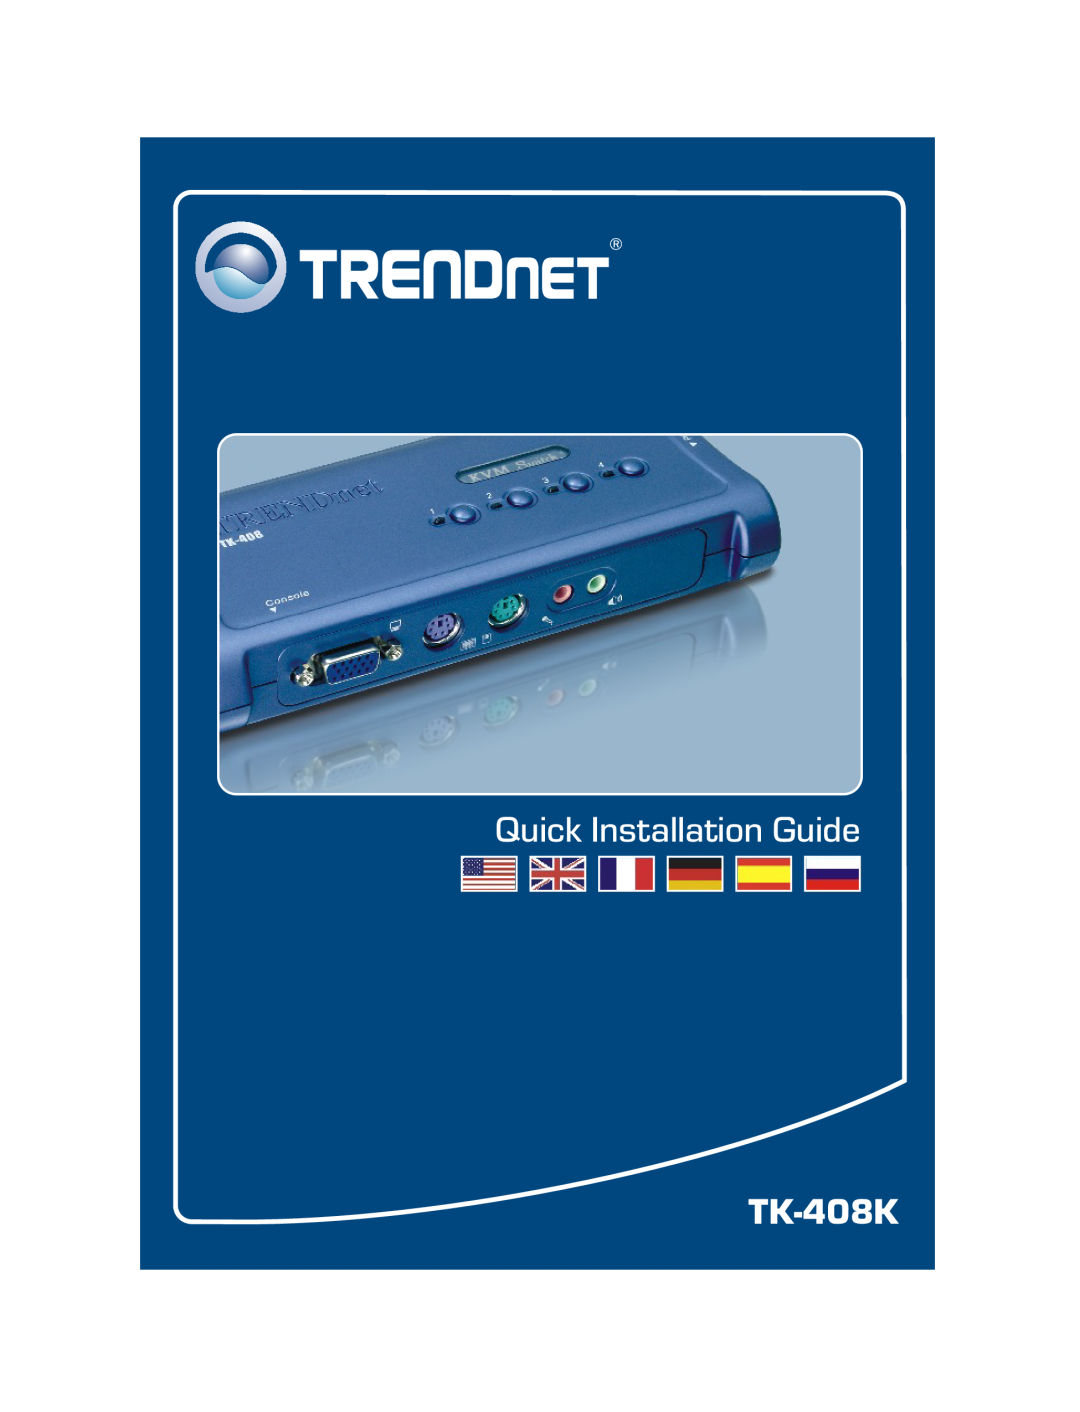 TRENDnet warranty Port PS/2 Audio KVM Switch Kit, TK-408Kv1.0R 